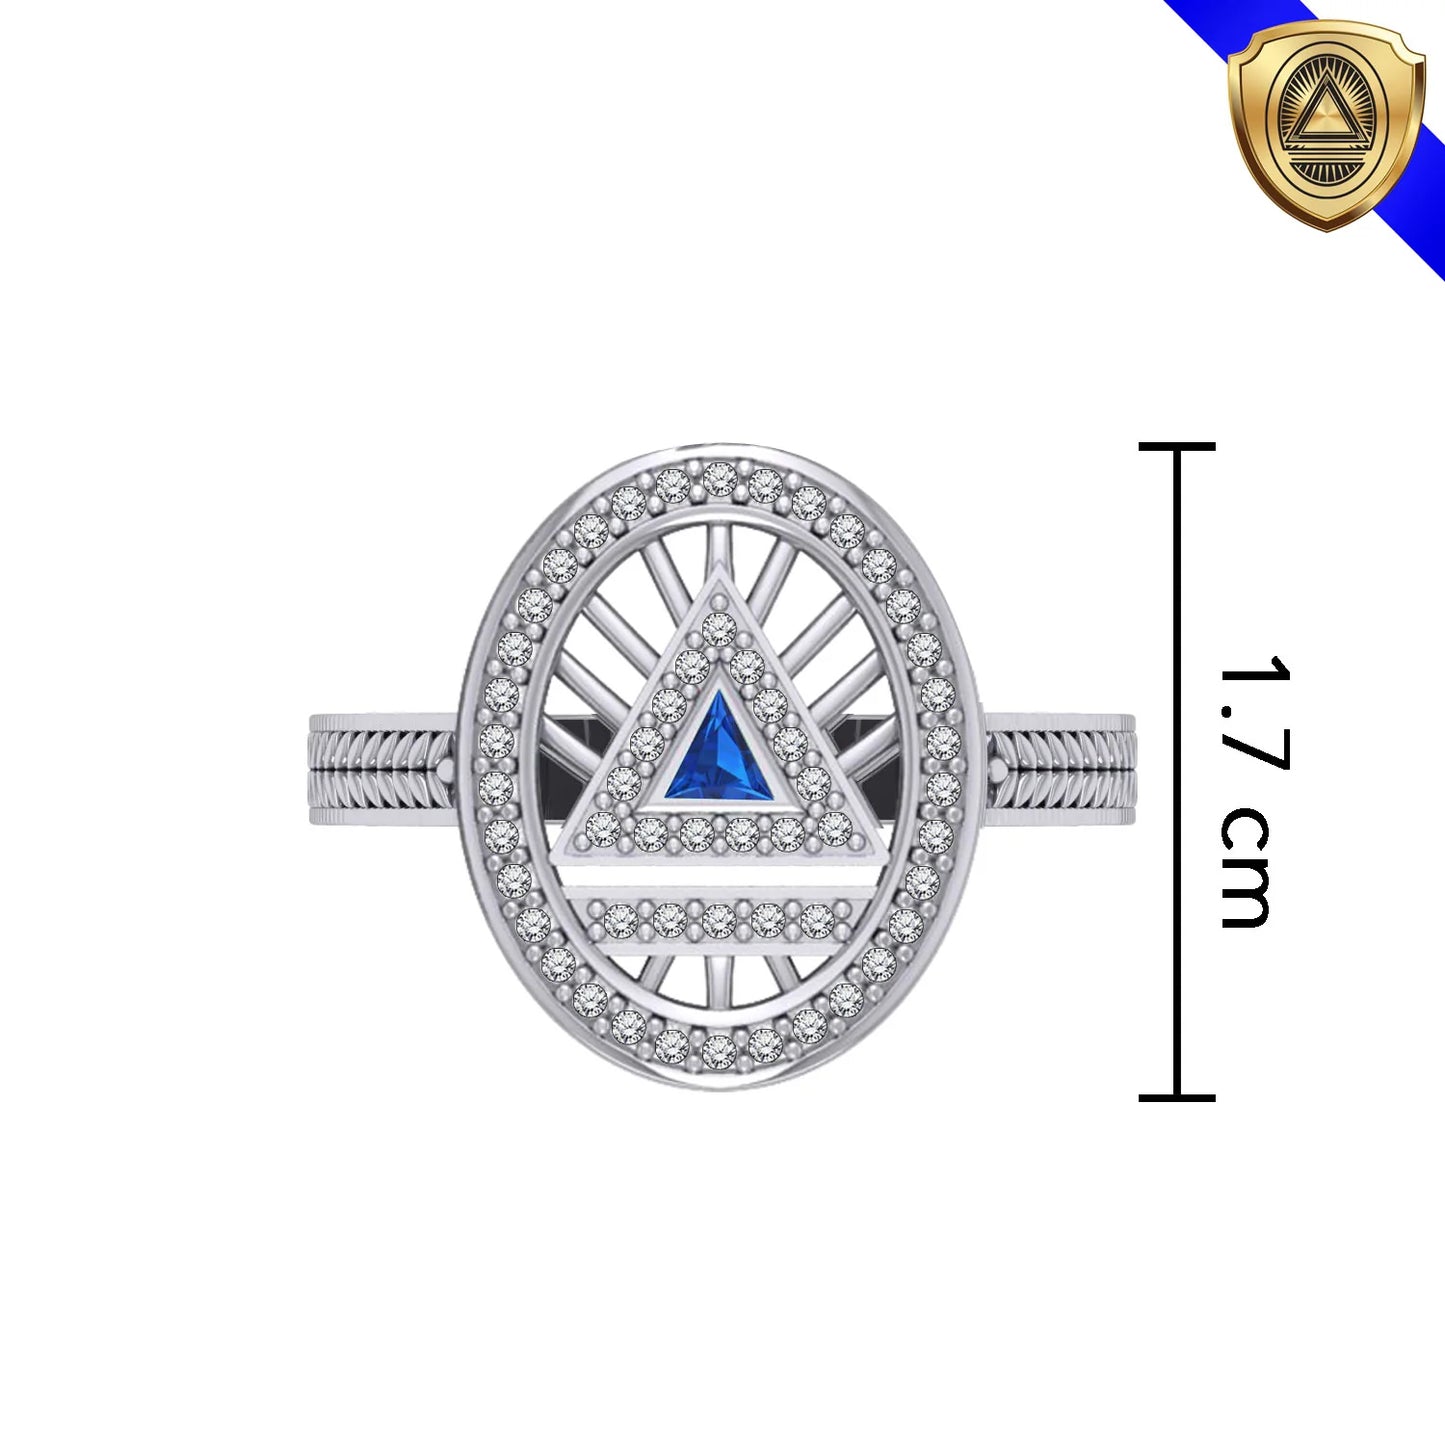 Women's Elegant System Ring (Silver)